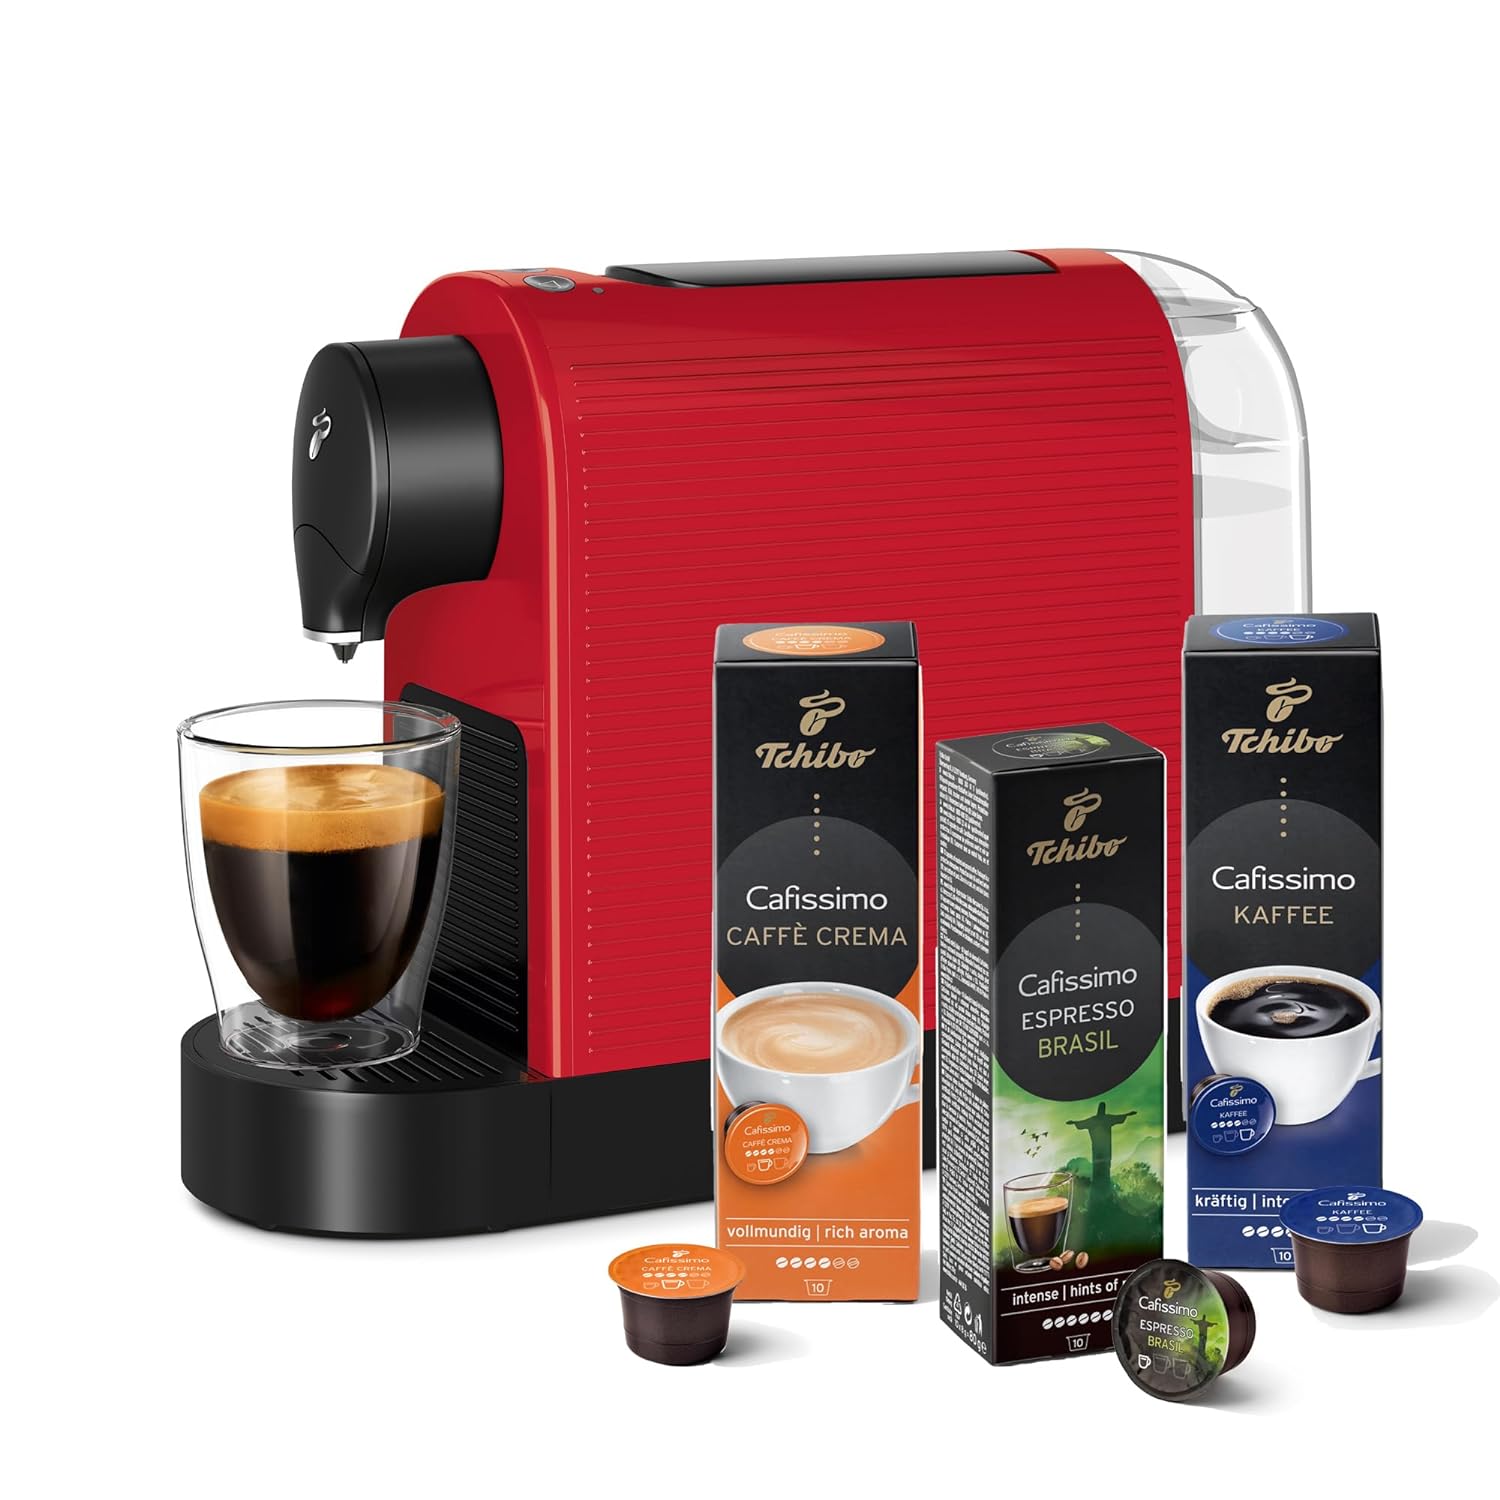 Tchibo Cafissimo Pure Plus Coffee Machine Capsule Machine Including 30 Capsules for Caffè Crema, Espresso and Coffee 0.8 L 1250 Watt 11.9 x 33.7 x 24 cm Black